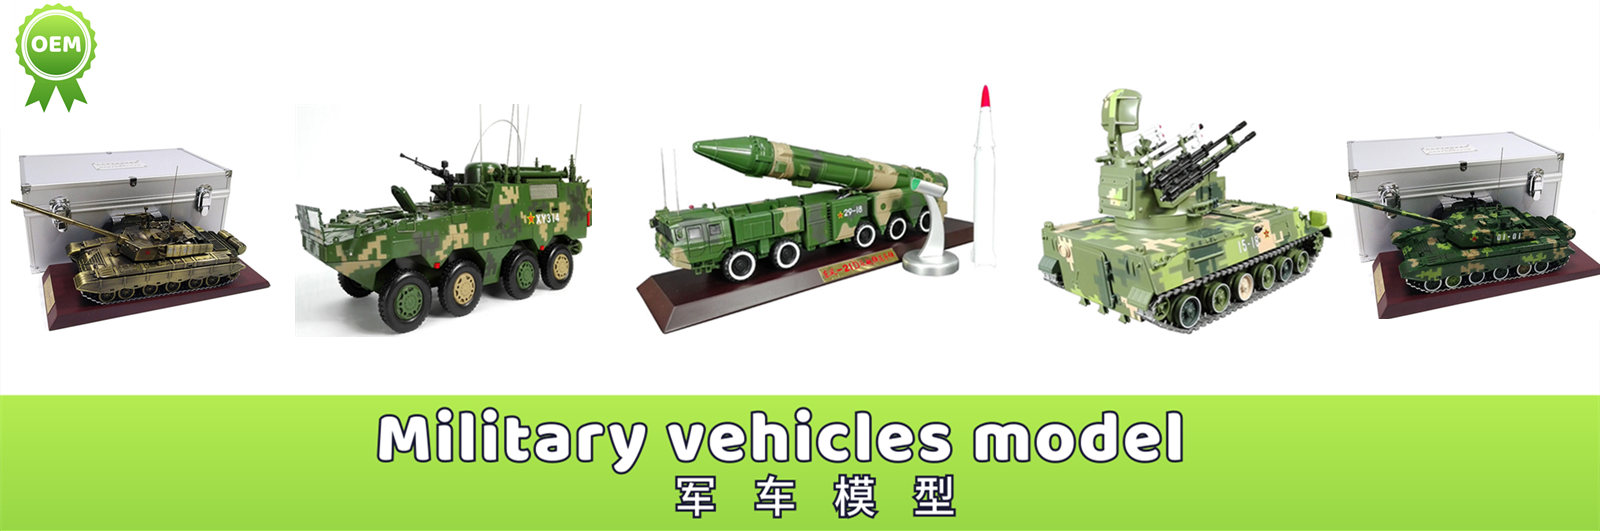 Military vehicles model